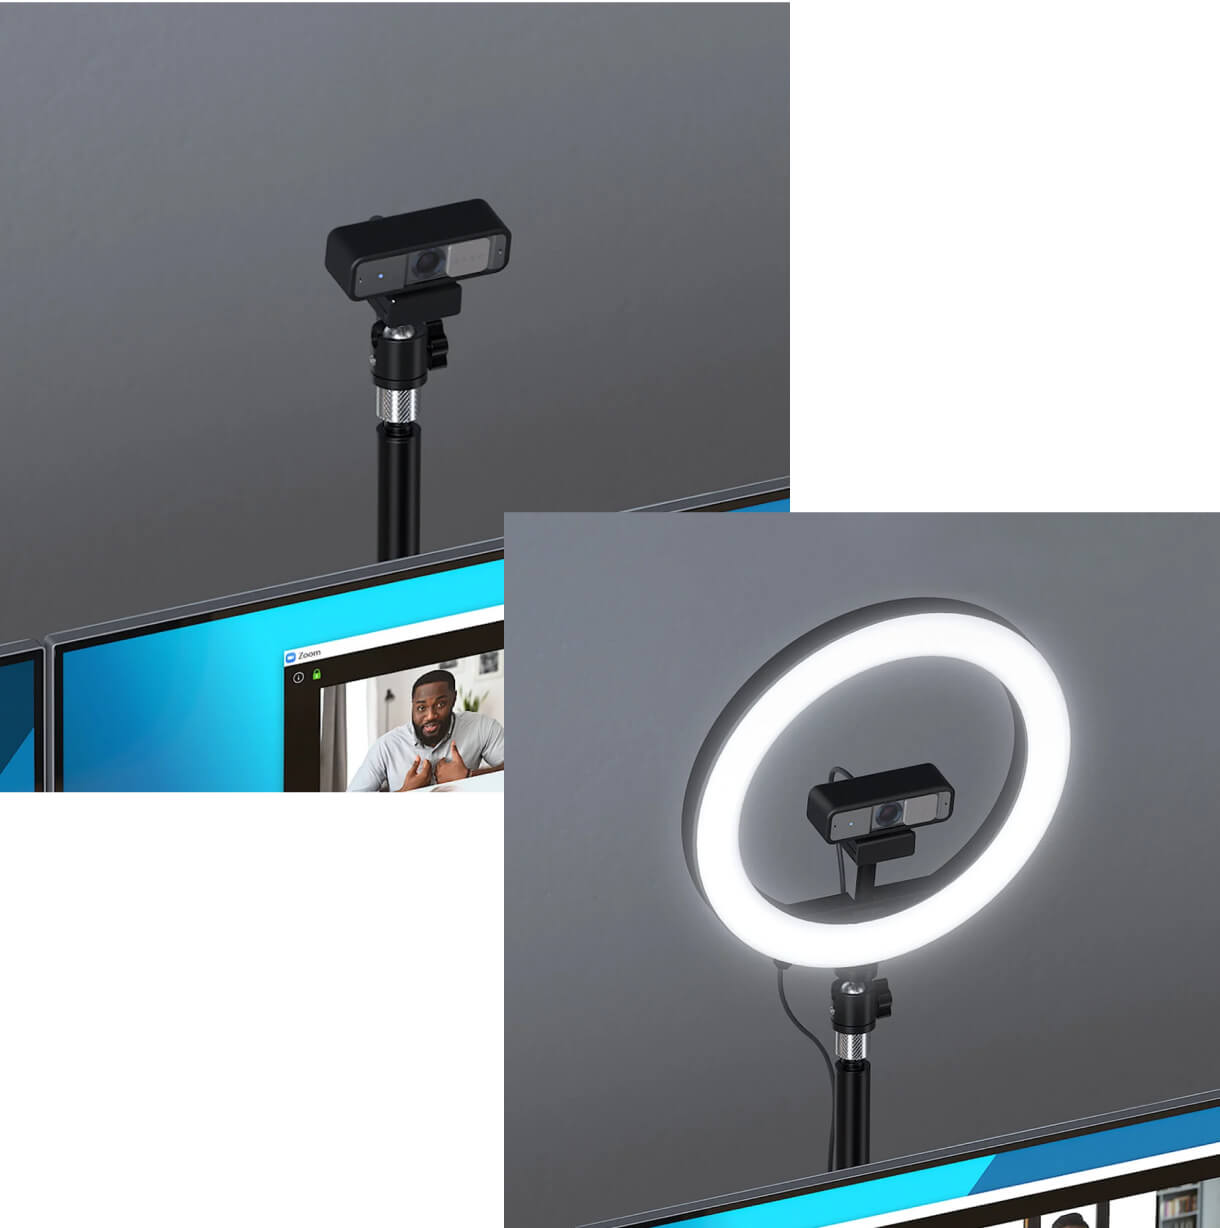 Professionele bureauopstelling met Kensington W2050 Pro 1080p Auto Focus Webcam, L1000 Bicolor Ring Light met Webcam Mount, A1000 Telescoping C-Clamp, Universal 3-in-1 Pro Audio Headset Switch
                            